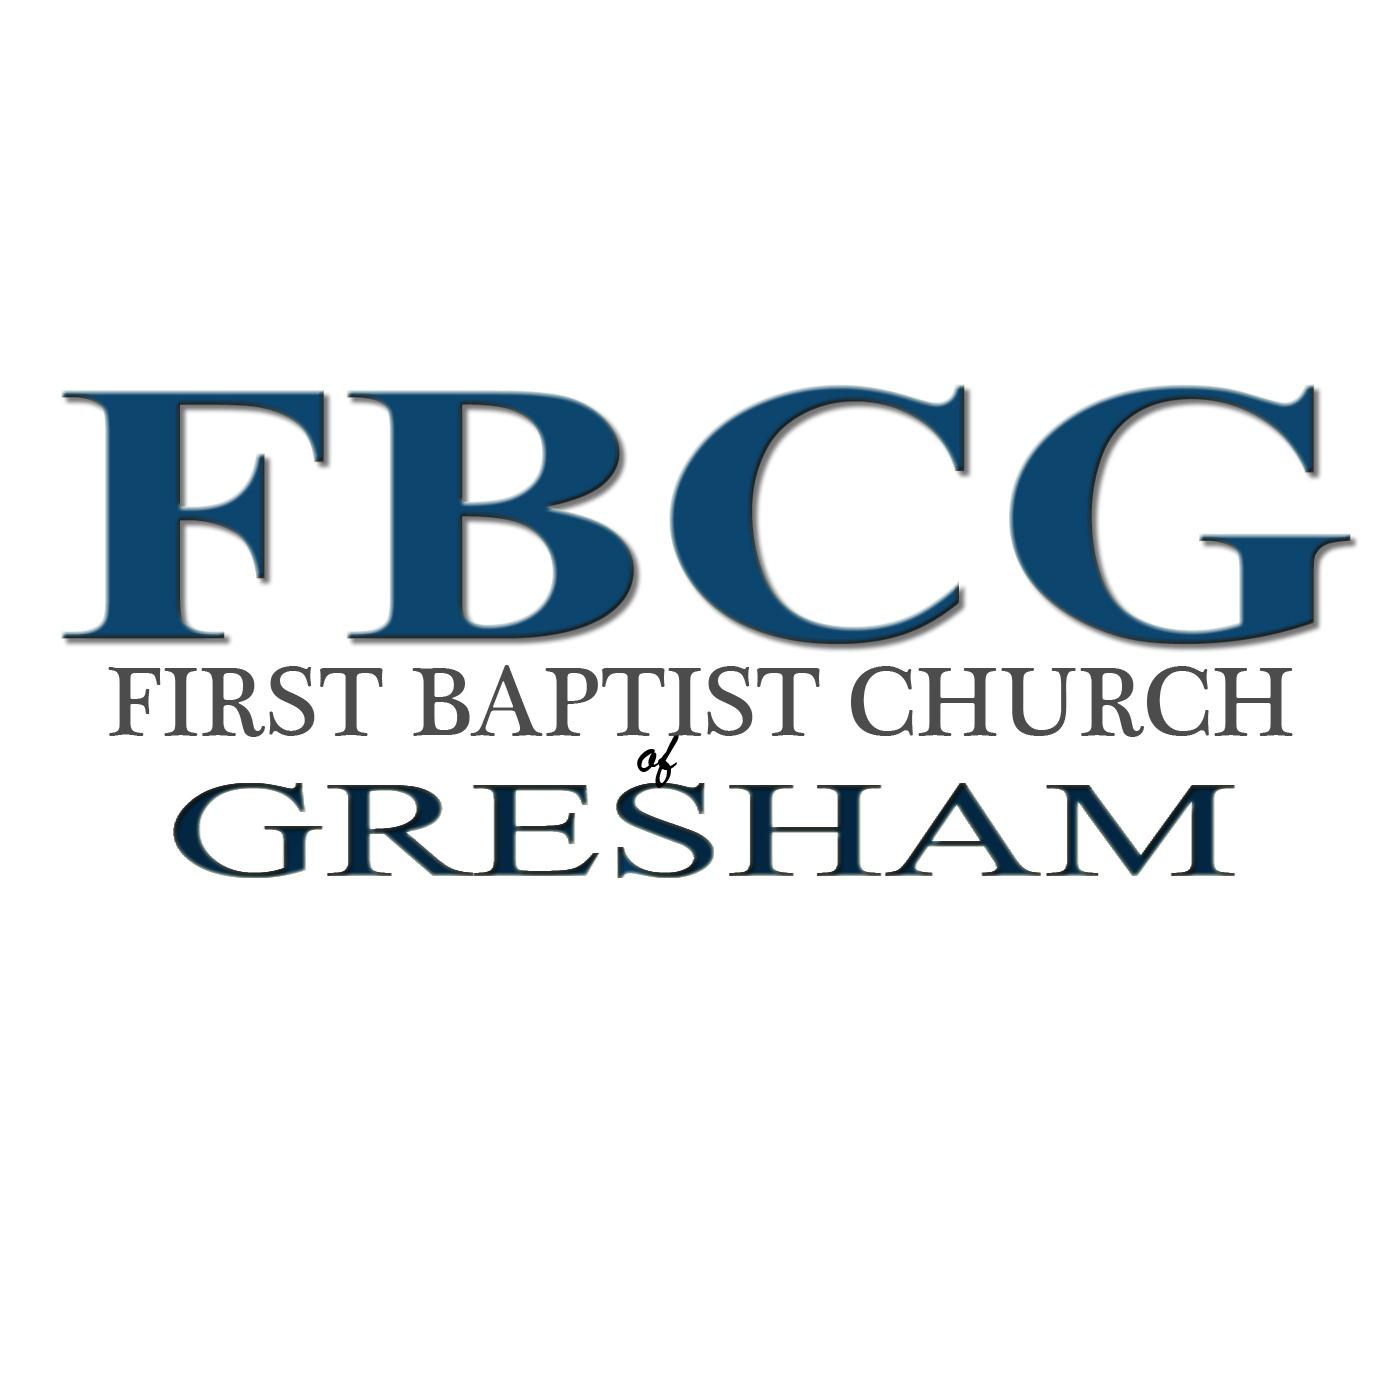 First Baptist Church of Gresham